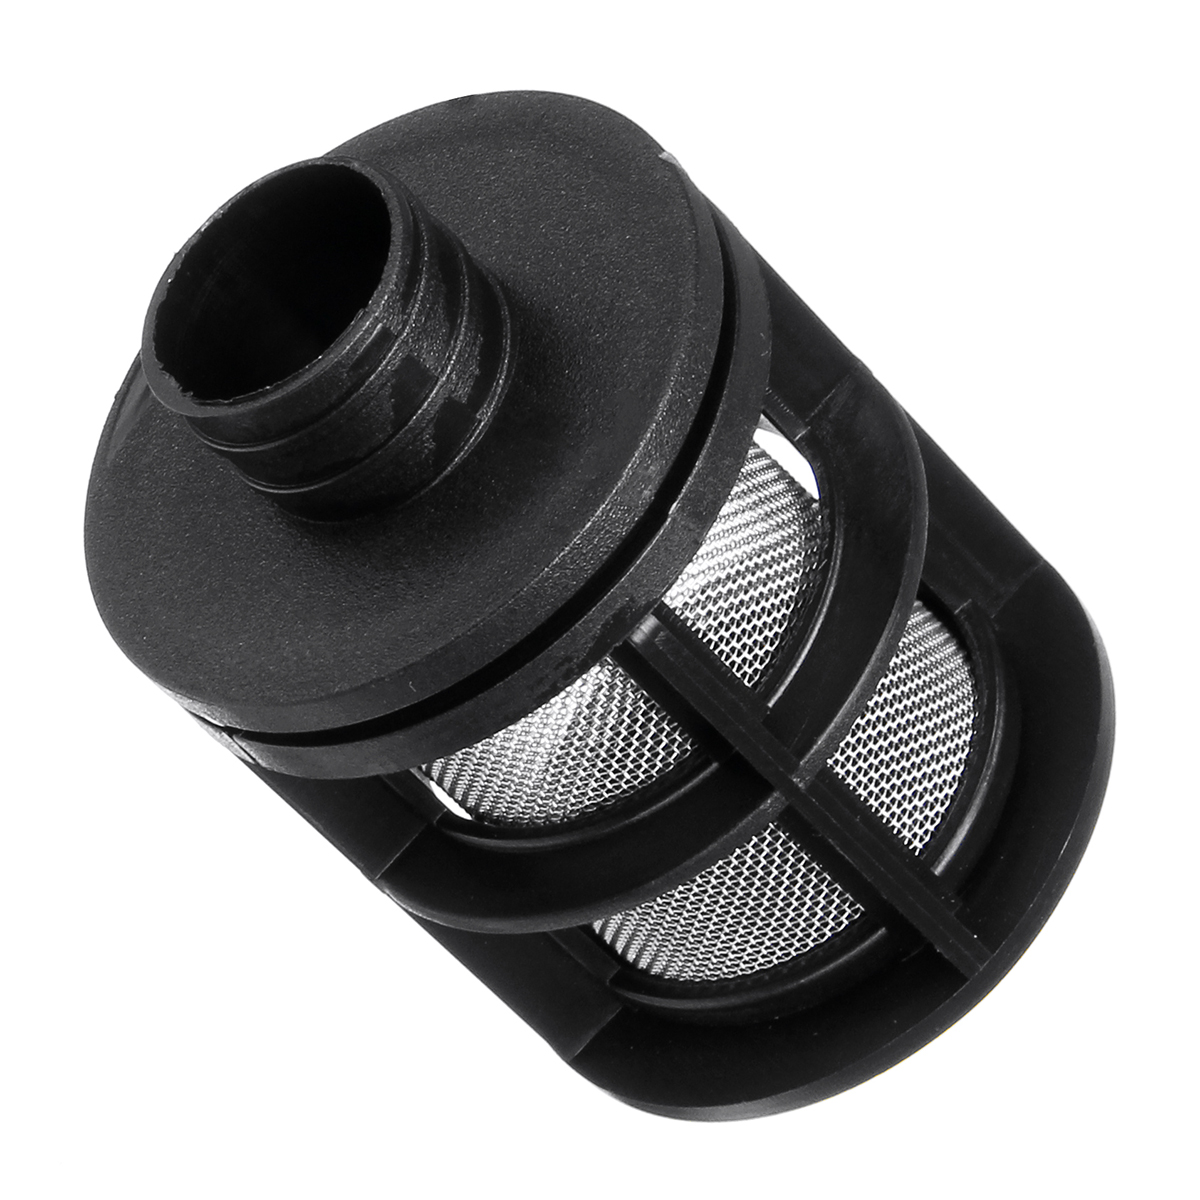 25mm-Air-Intake-Filter-Silencer-For-Dometic-Eberspacher-Webasto-Diesel-Heater-1409798-9